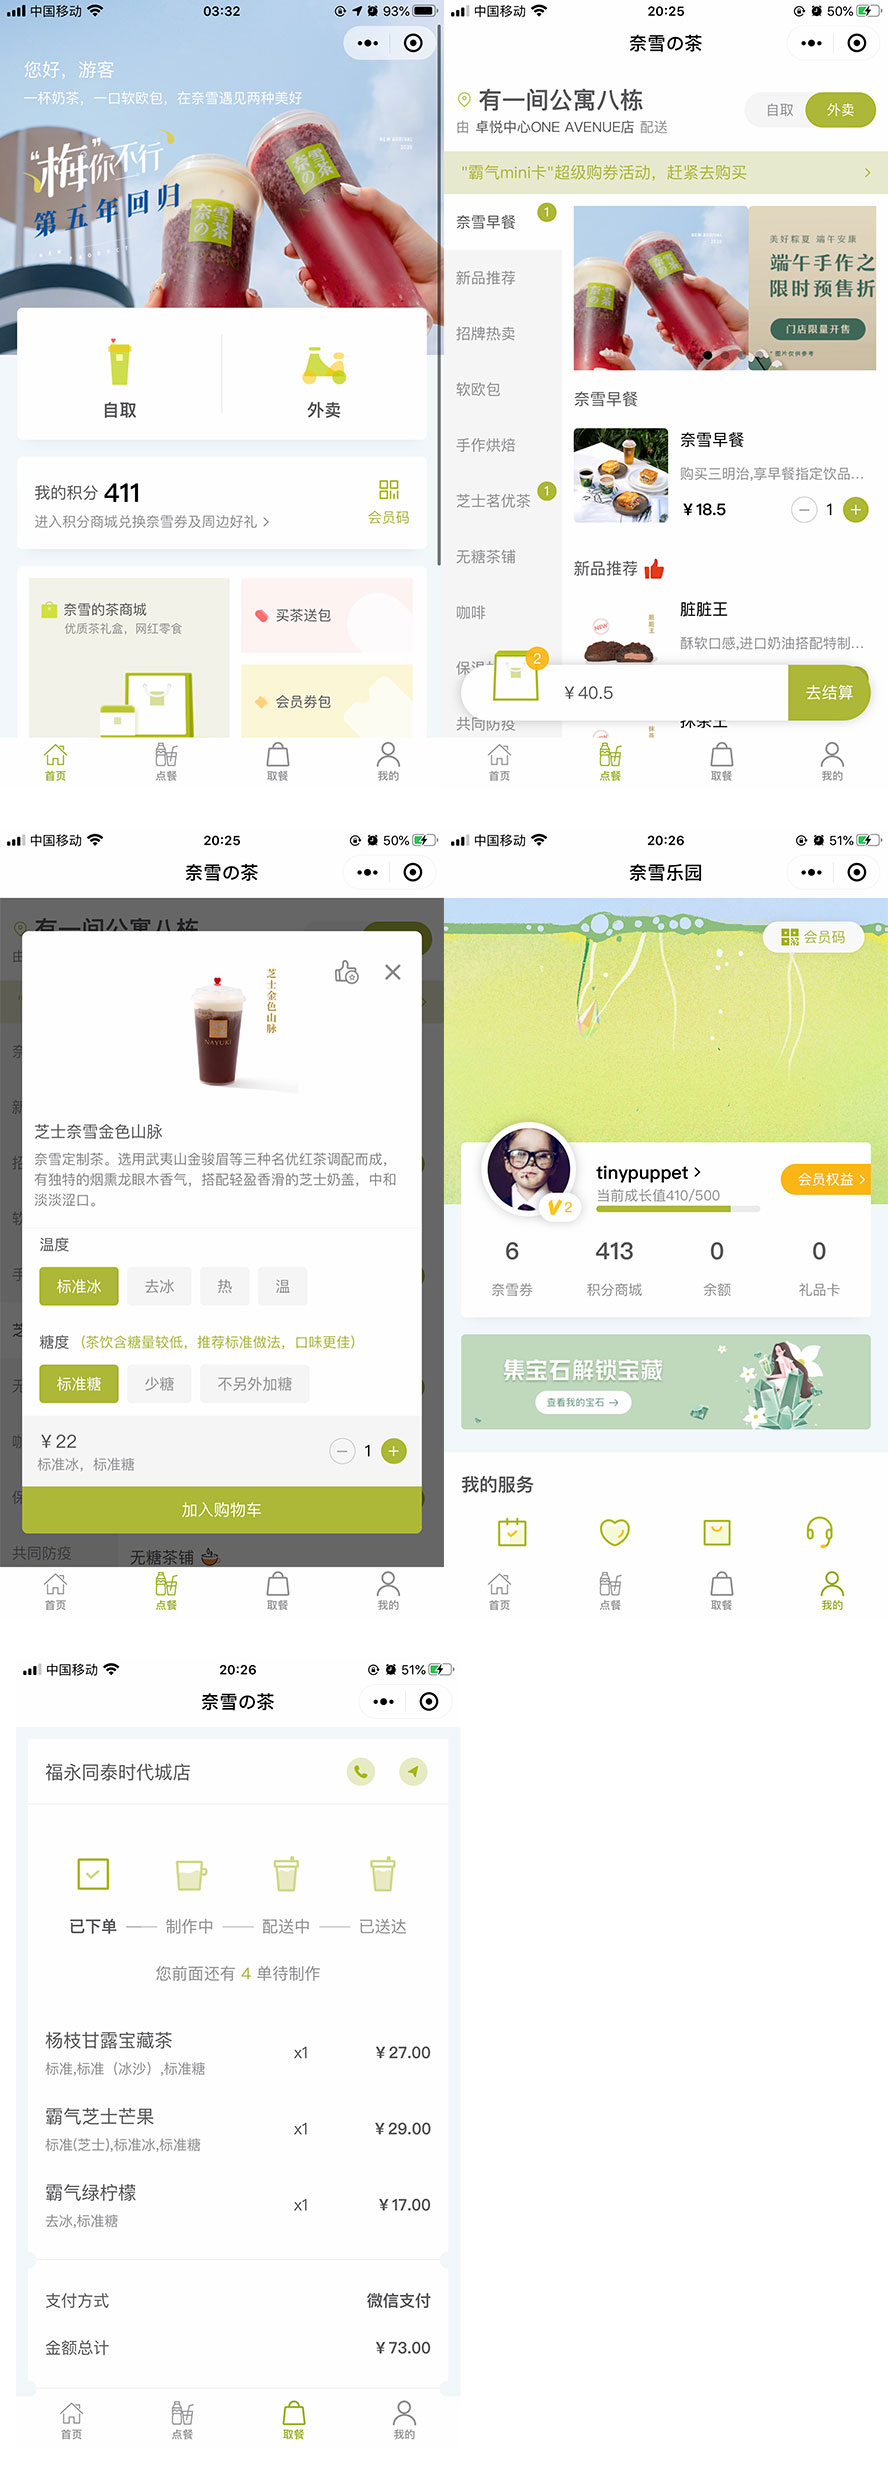 仿奈雪の茶前端uniapp商城小程序app模板【精品】